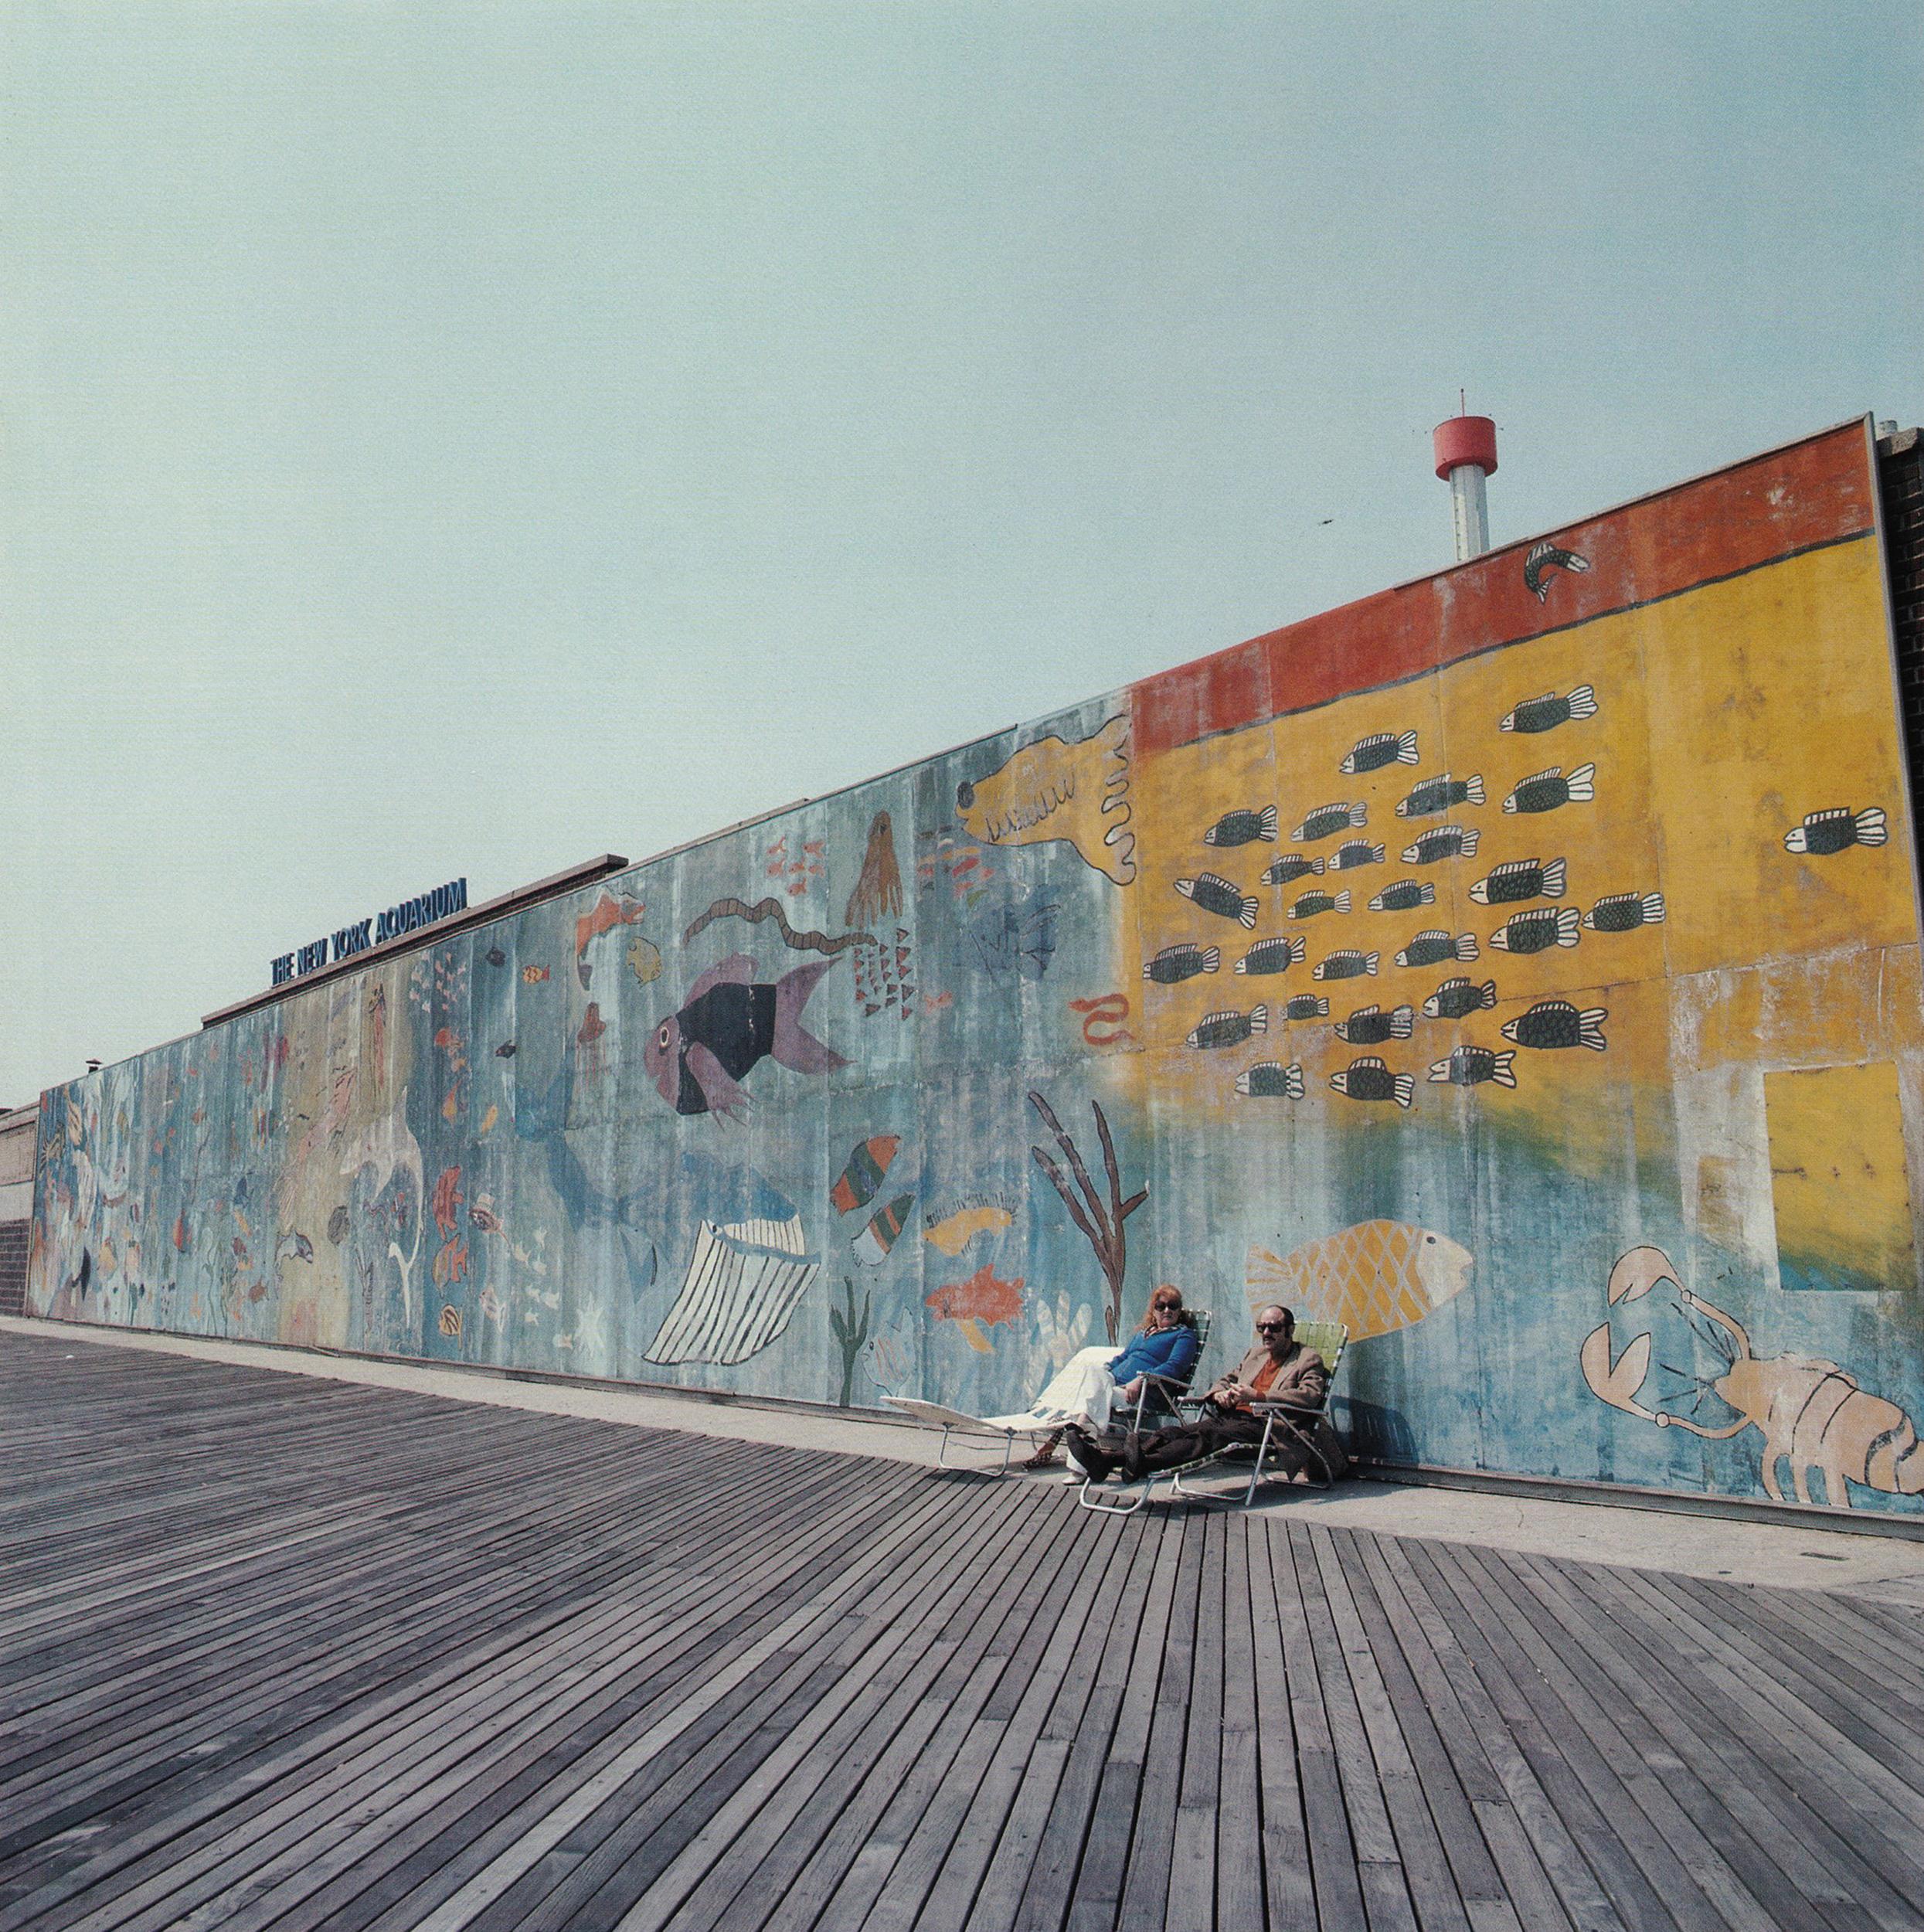 Michael K. Yamaoka  Color Photograph - American Contemporary Photo by M. K. Yamaoka - Aquarium at Coney Island, NY   